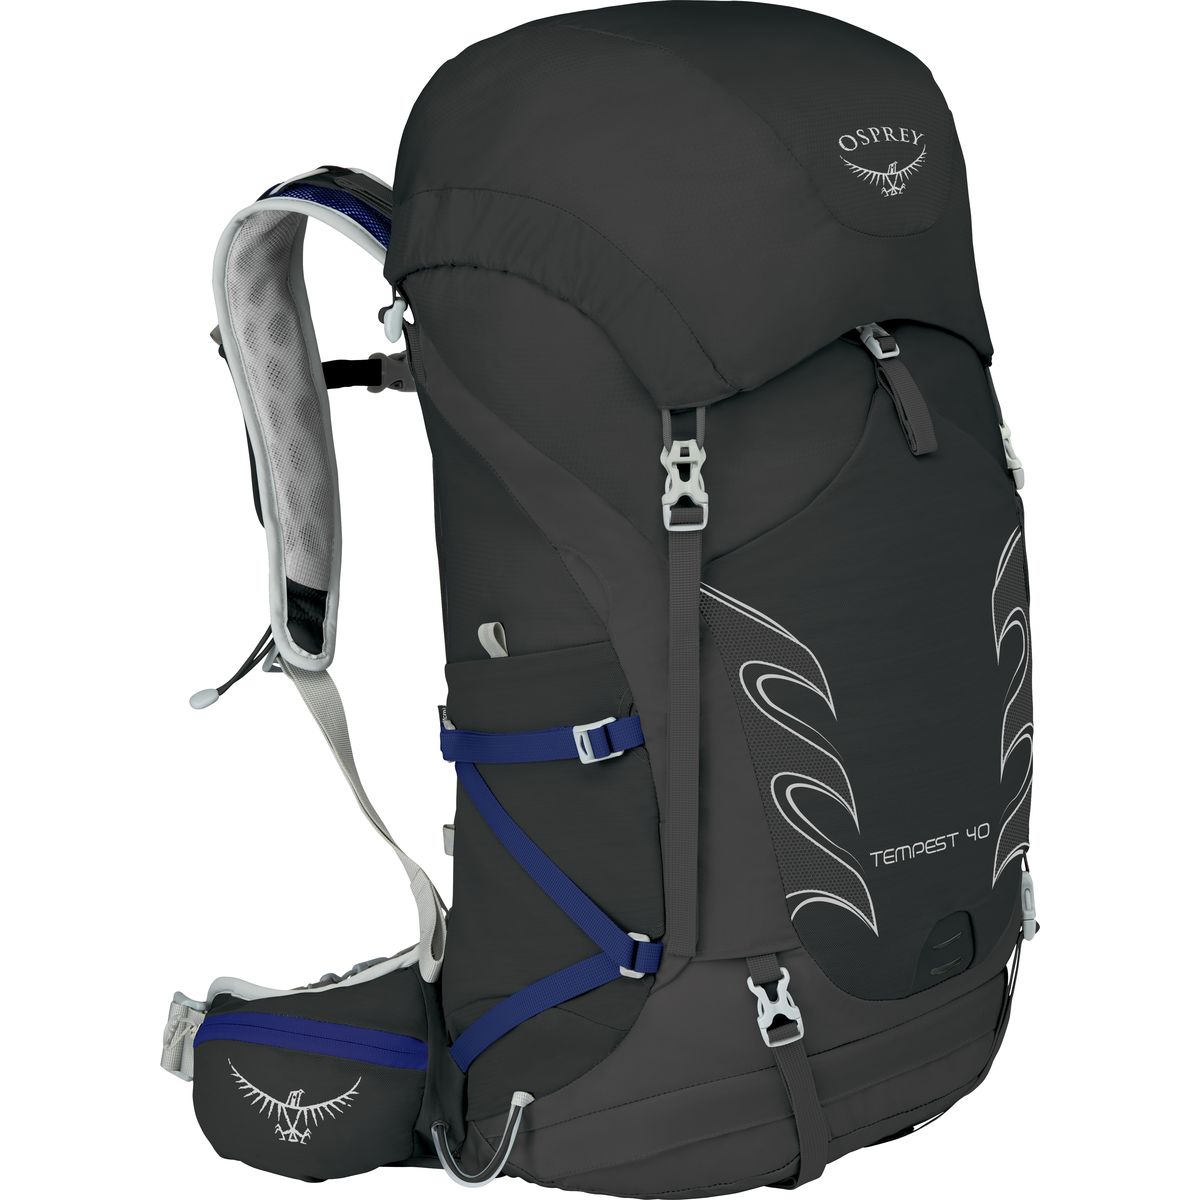 Osprey Packs Tempest 40 Backpack - Women's - 2319-2441cu in 